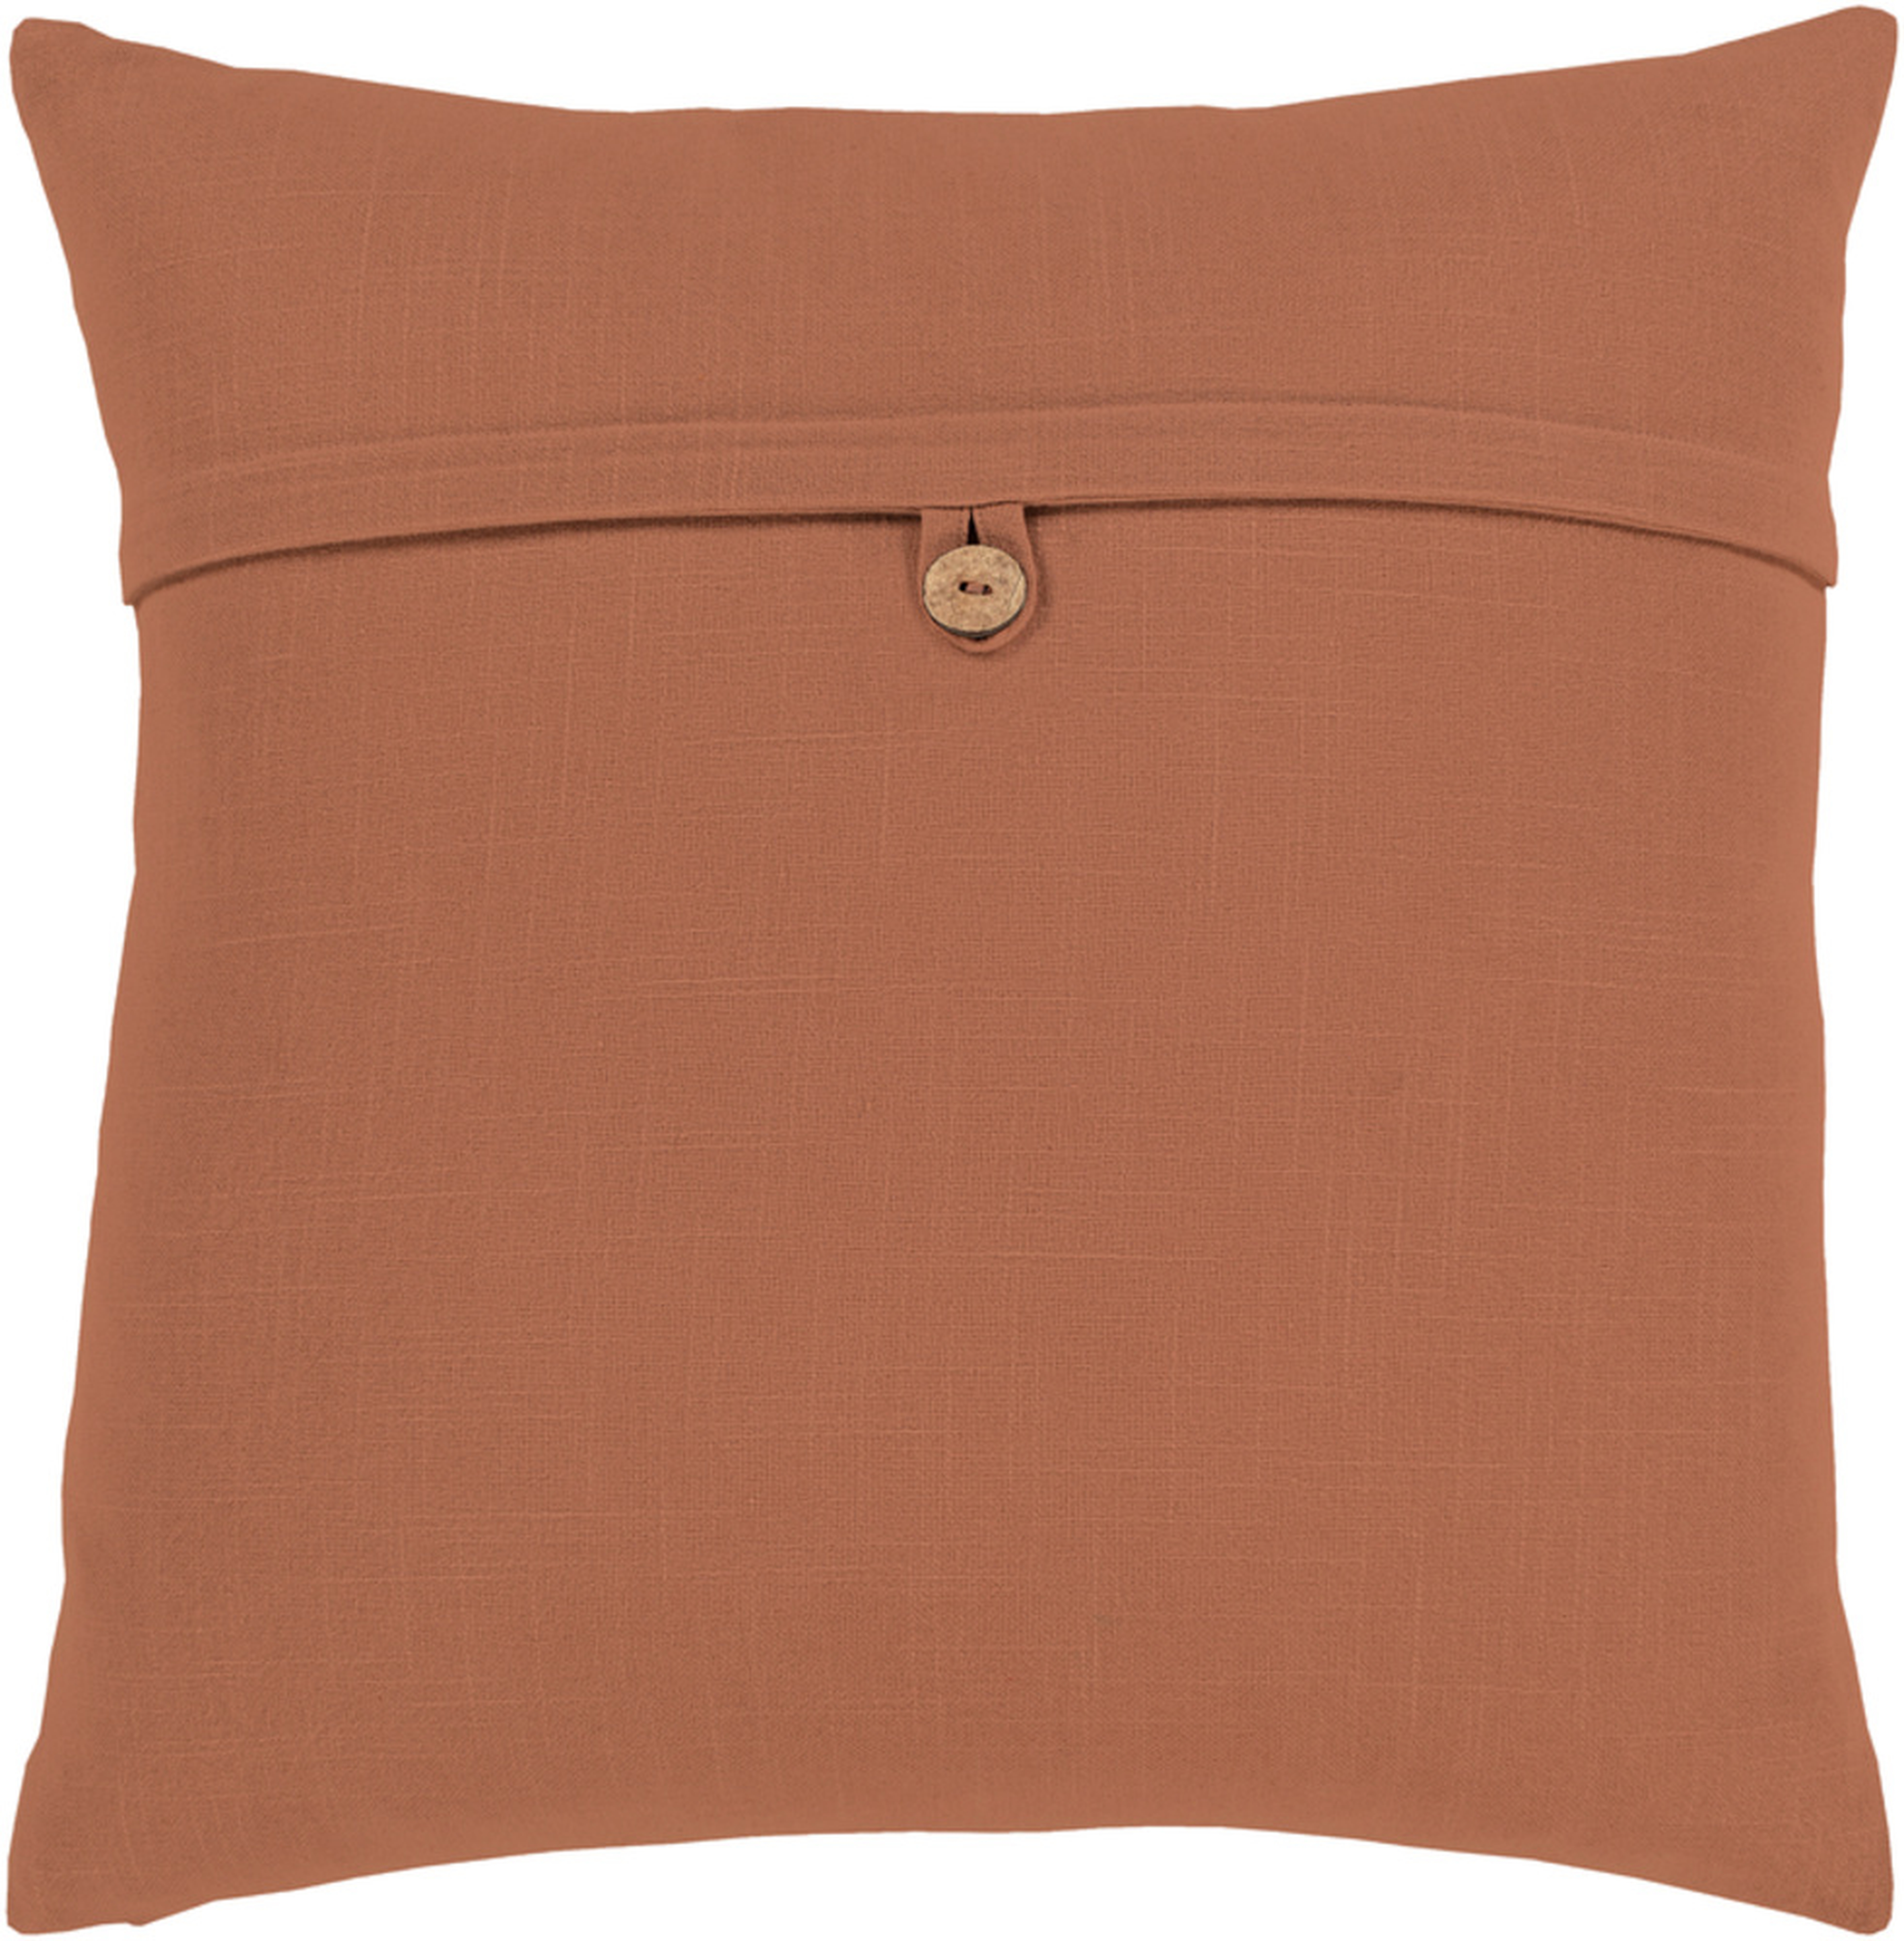 Perine Pillow, 18" x 18", Camel - Cove Goods